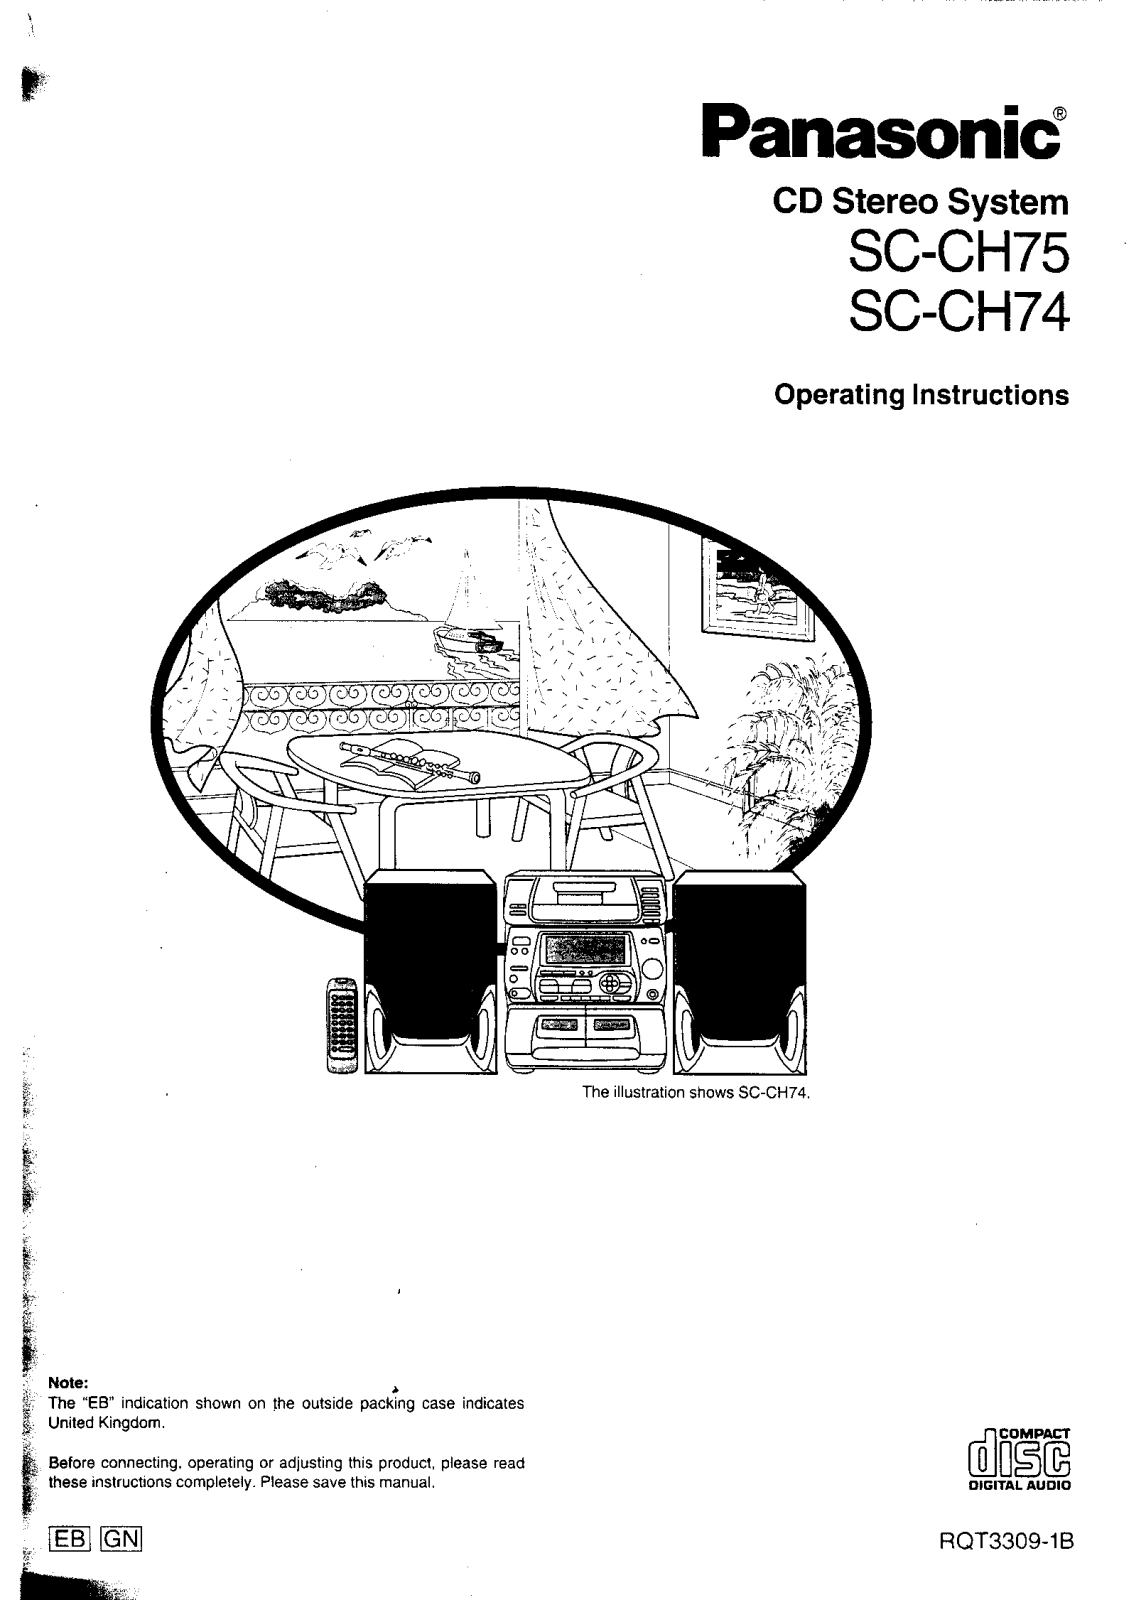 Panasonic SC-CH74 User Manual